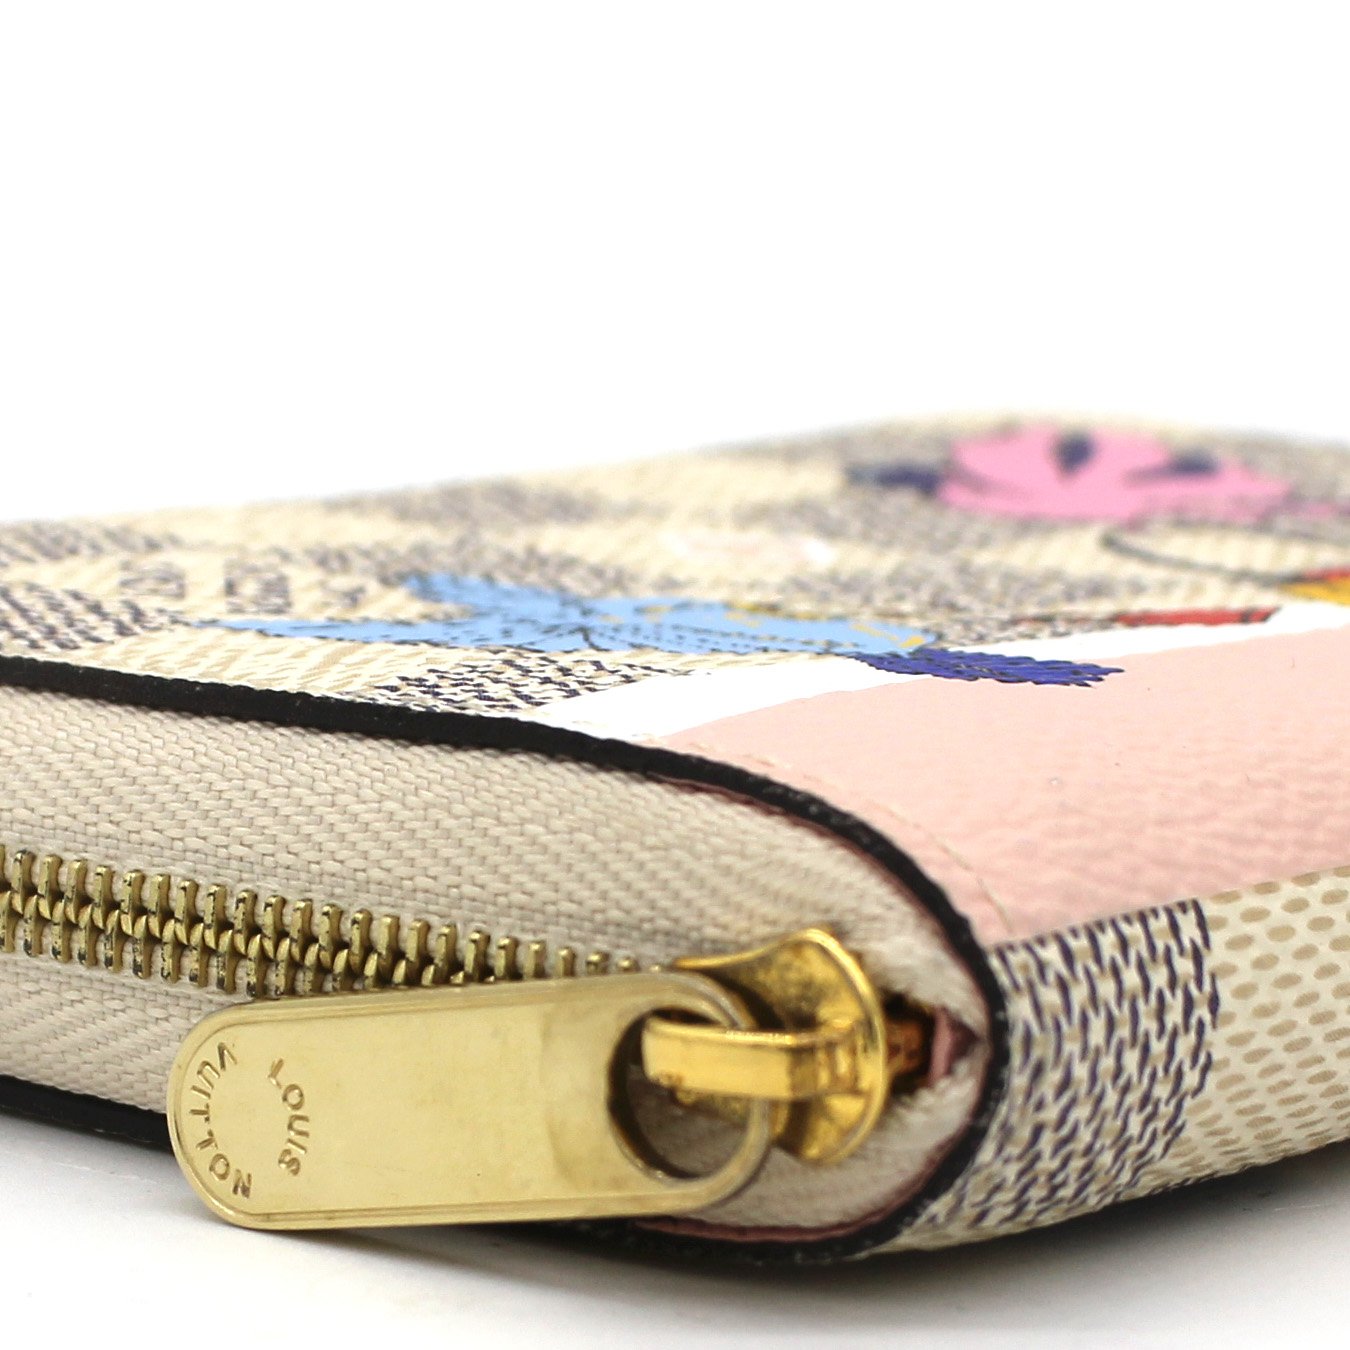 Sydney's Fashion Diary: Louis Vuitton zippy coin wallet review +